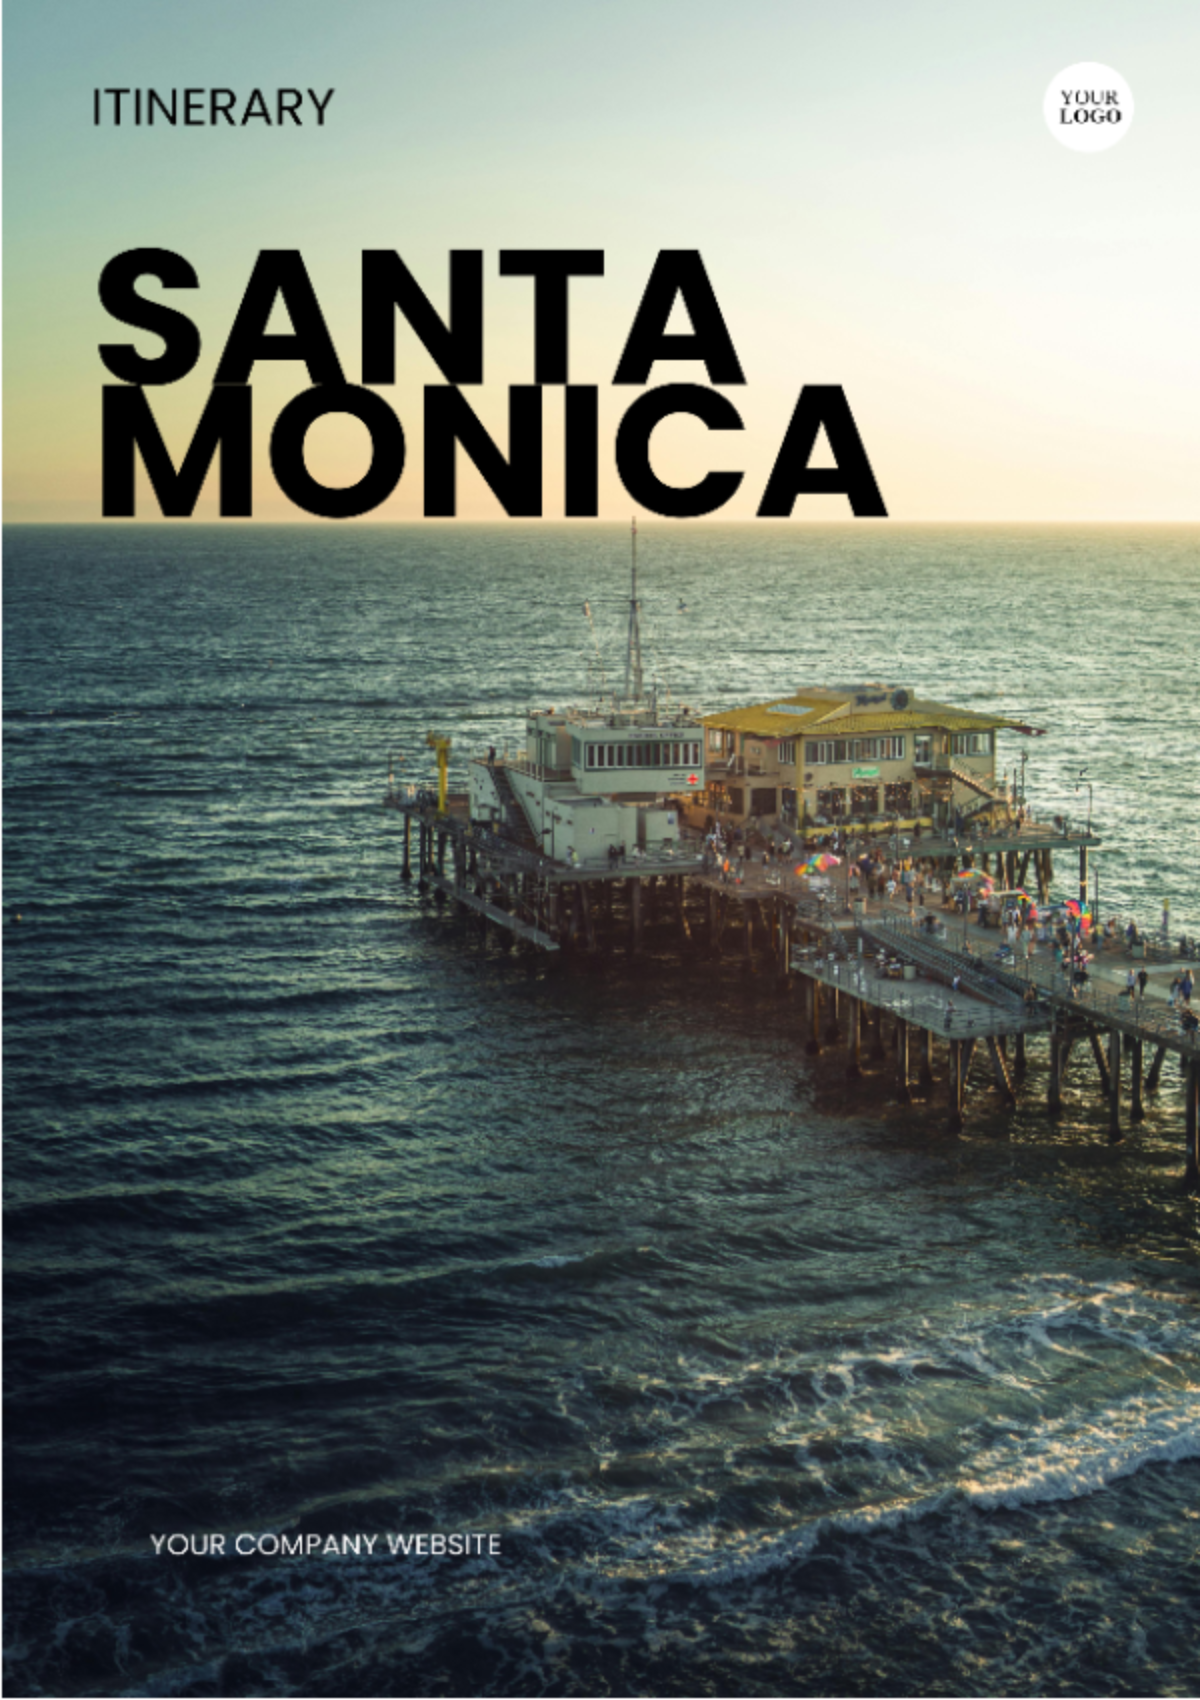 Santa Monica Itinerary Template